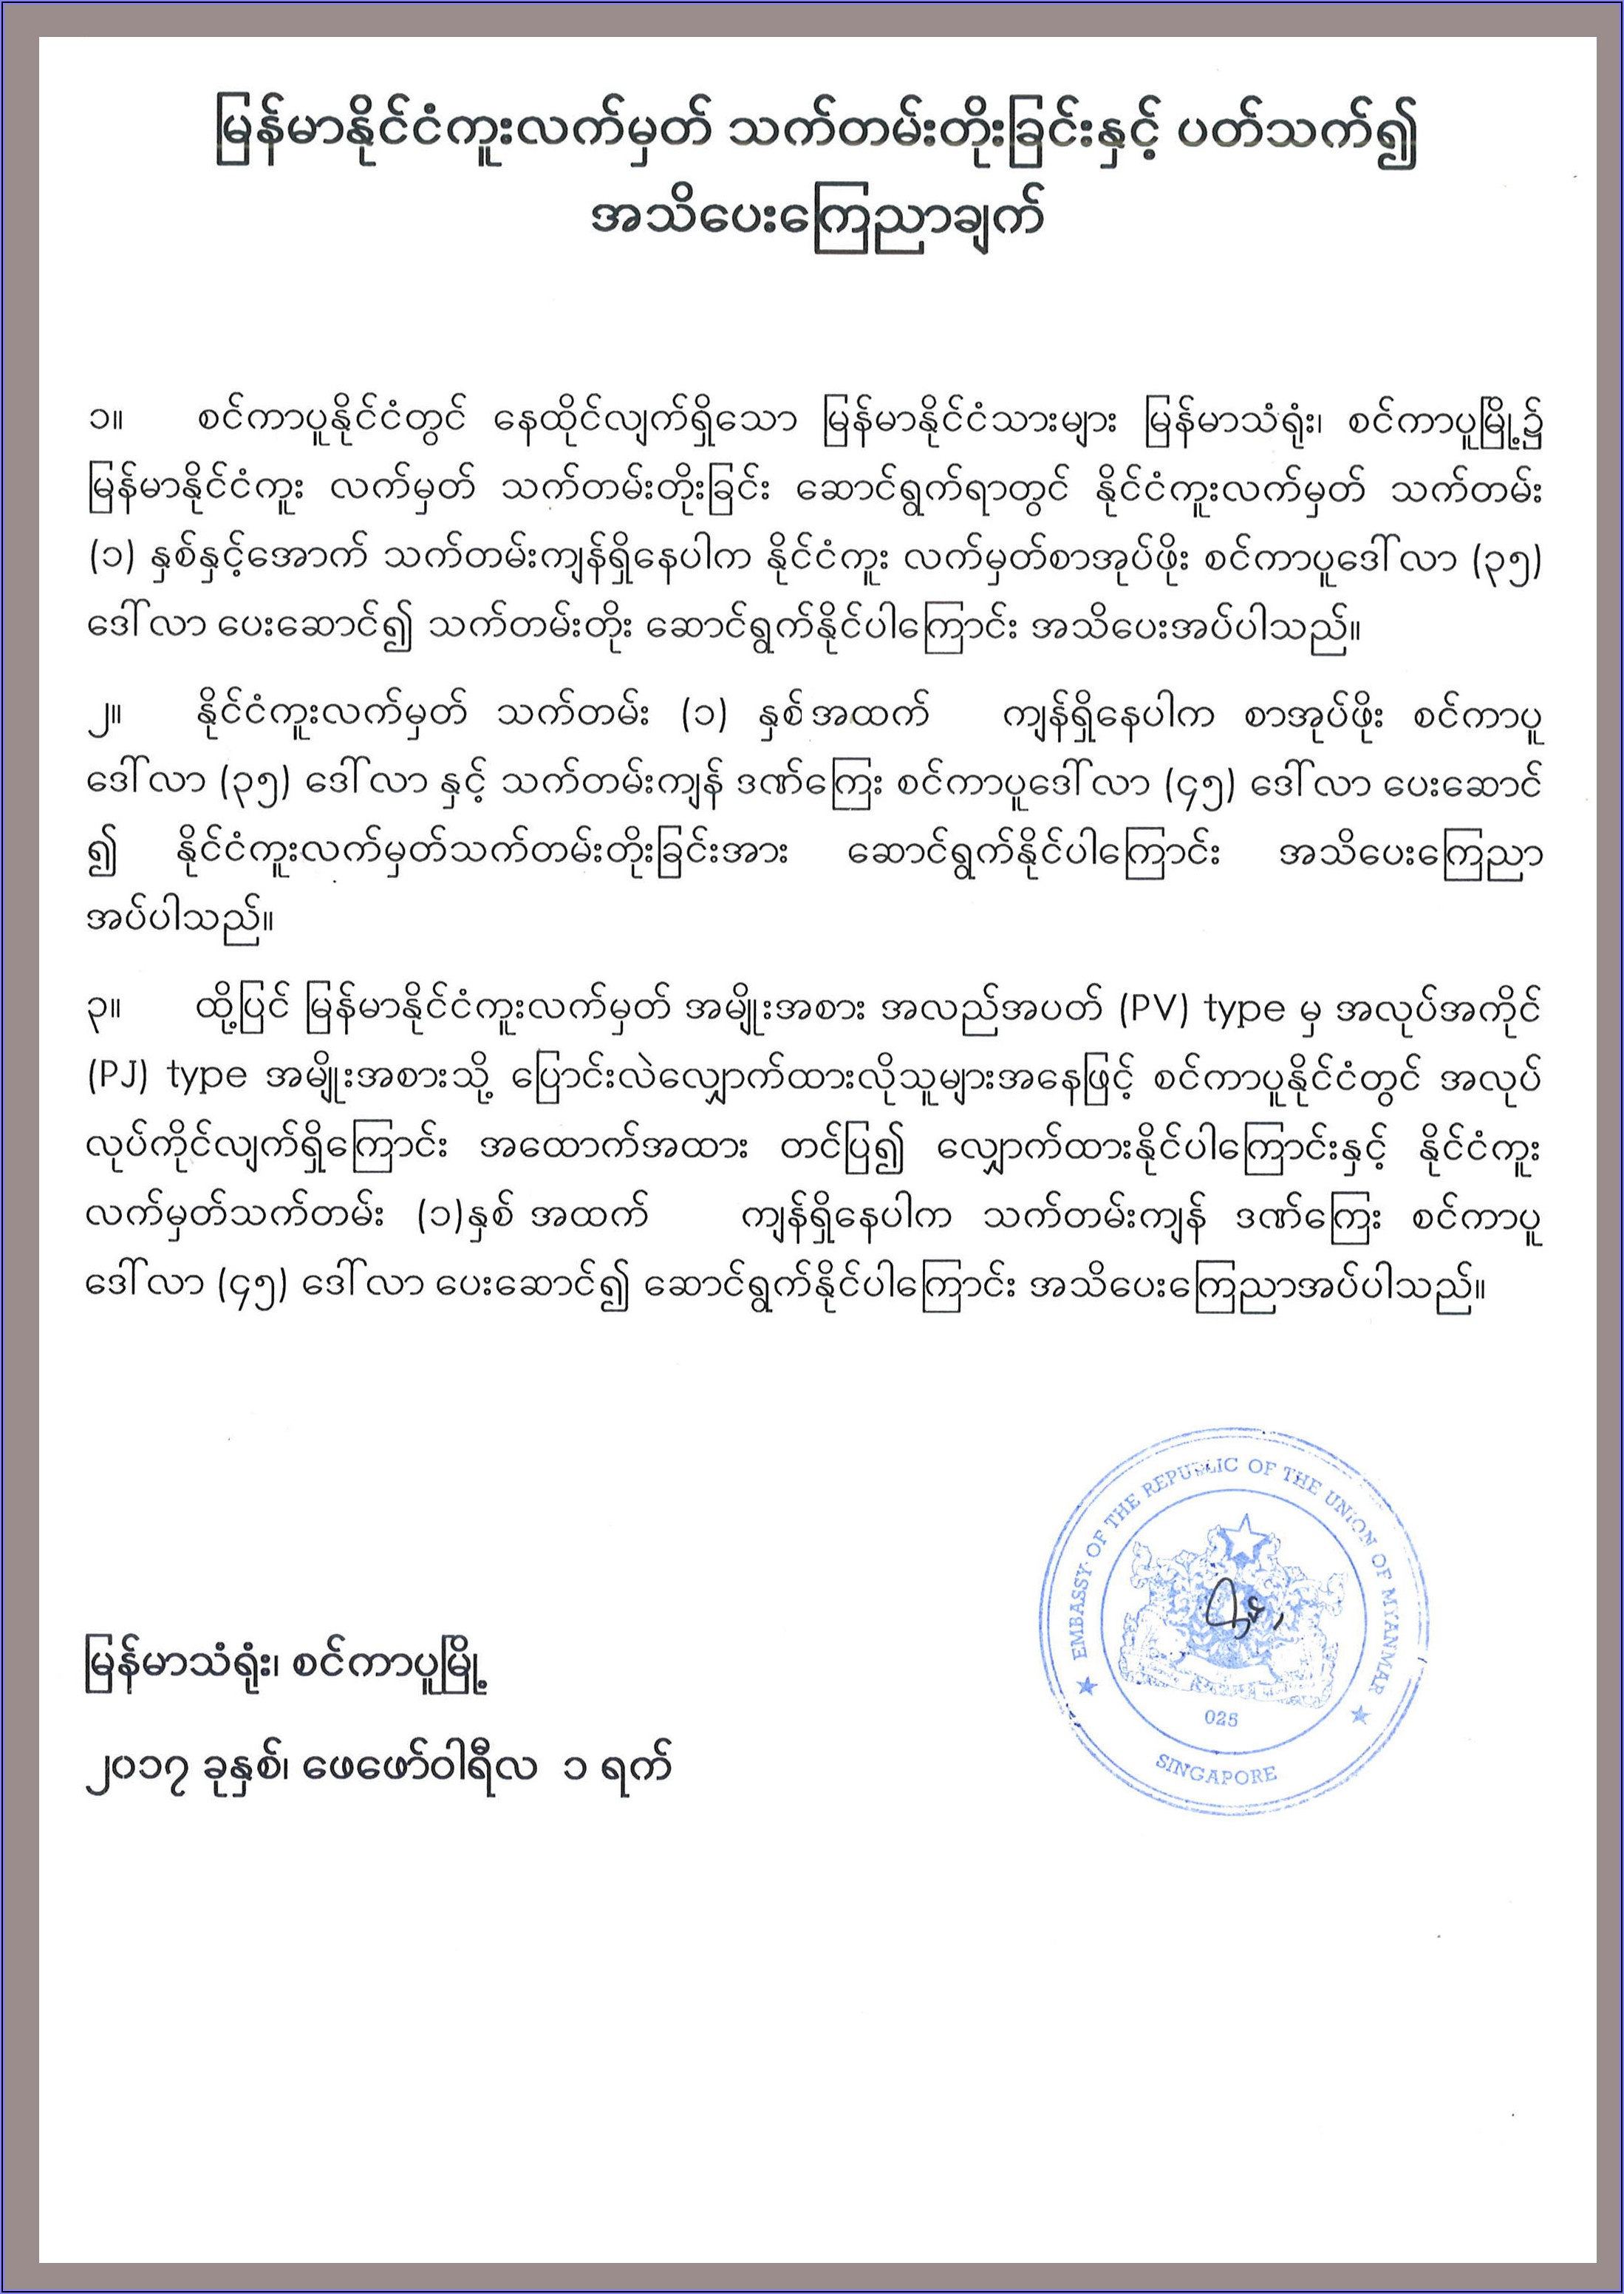 Myanmar Embassy Singapore Visa Application Form